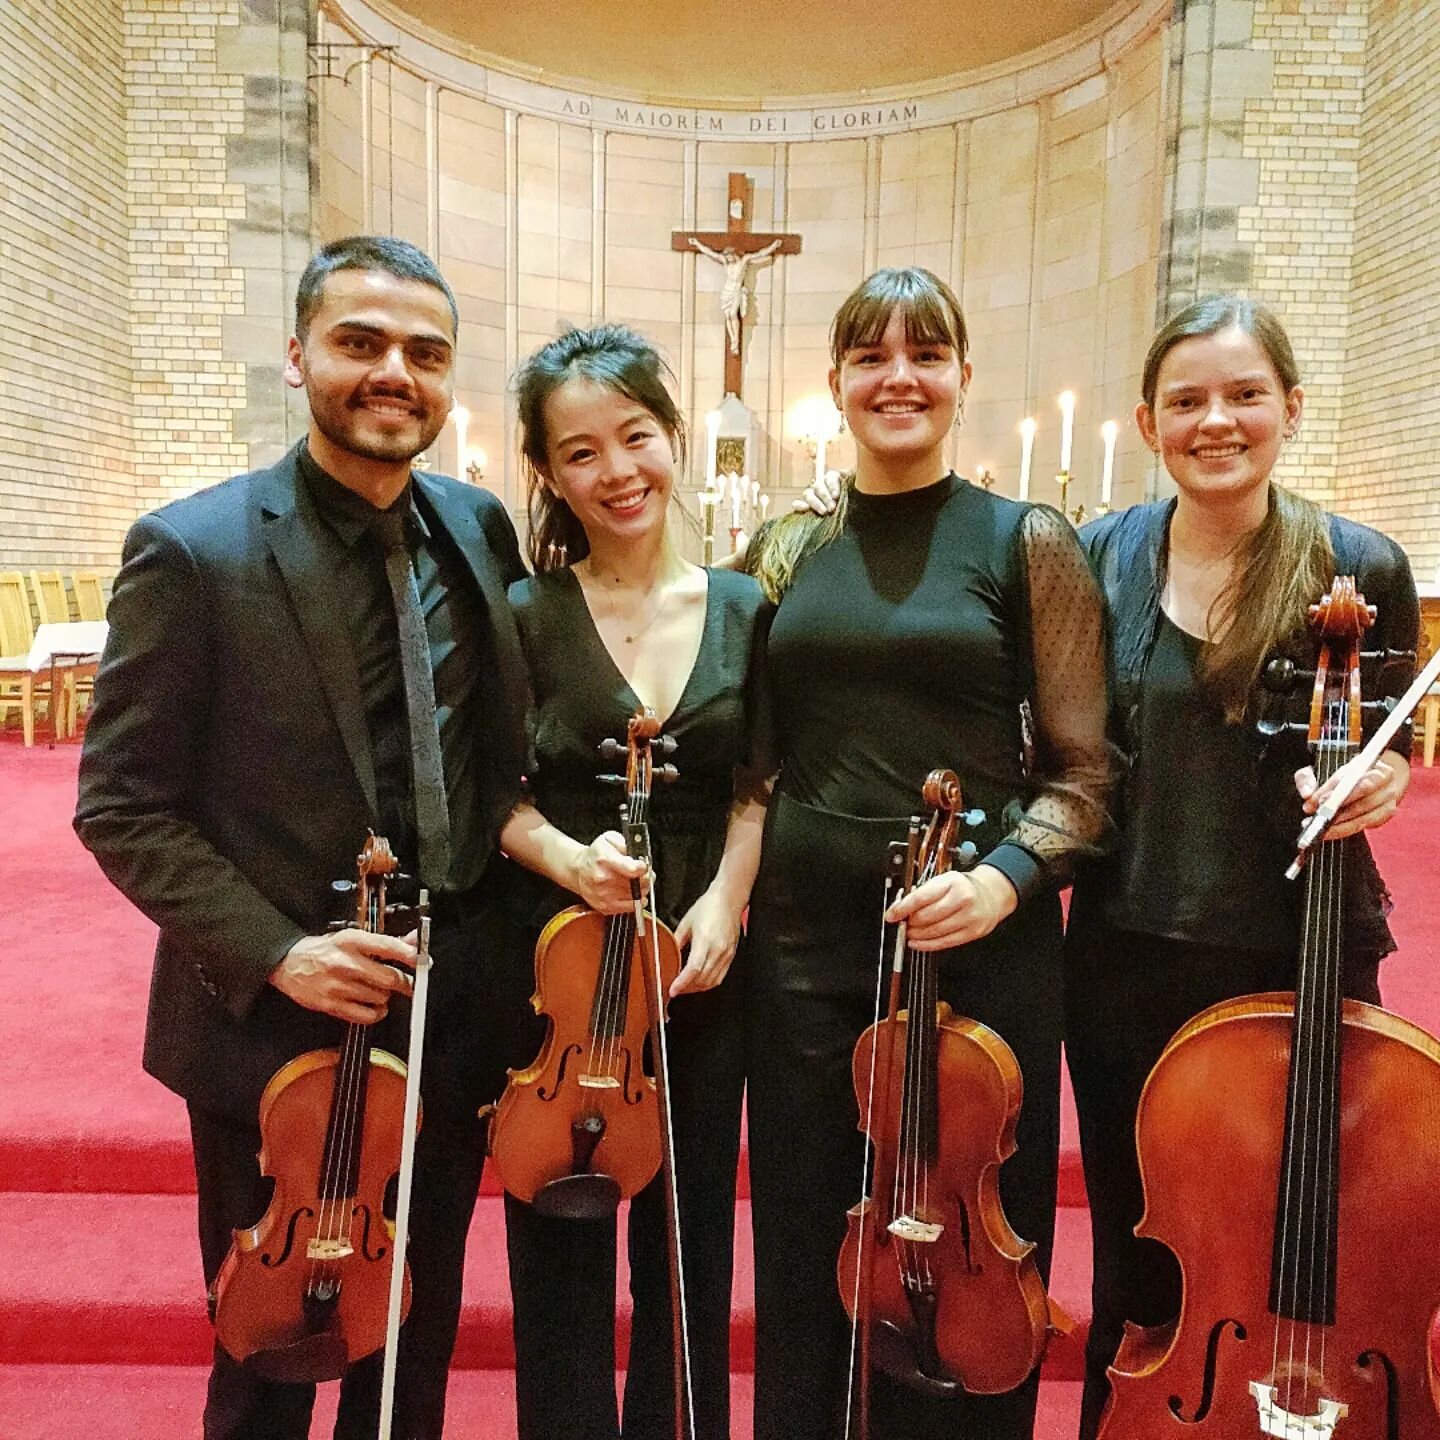 The Rosemont String Quartet are all smiles after performing Schubert's Rosamunde Quartet for St Mary's Lenten Concert